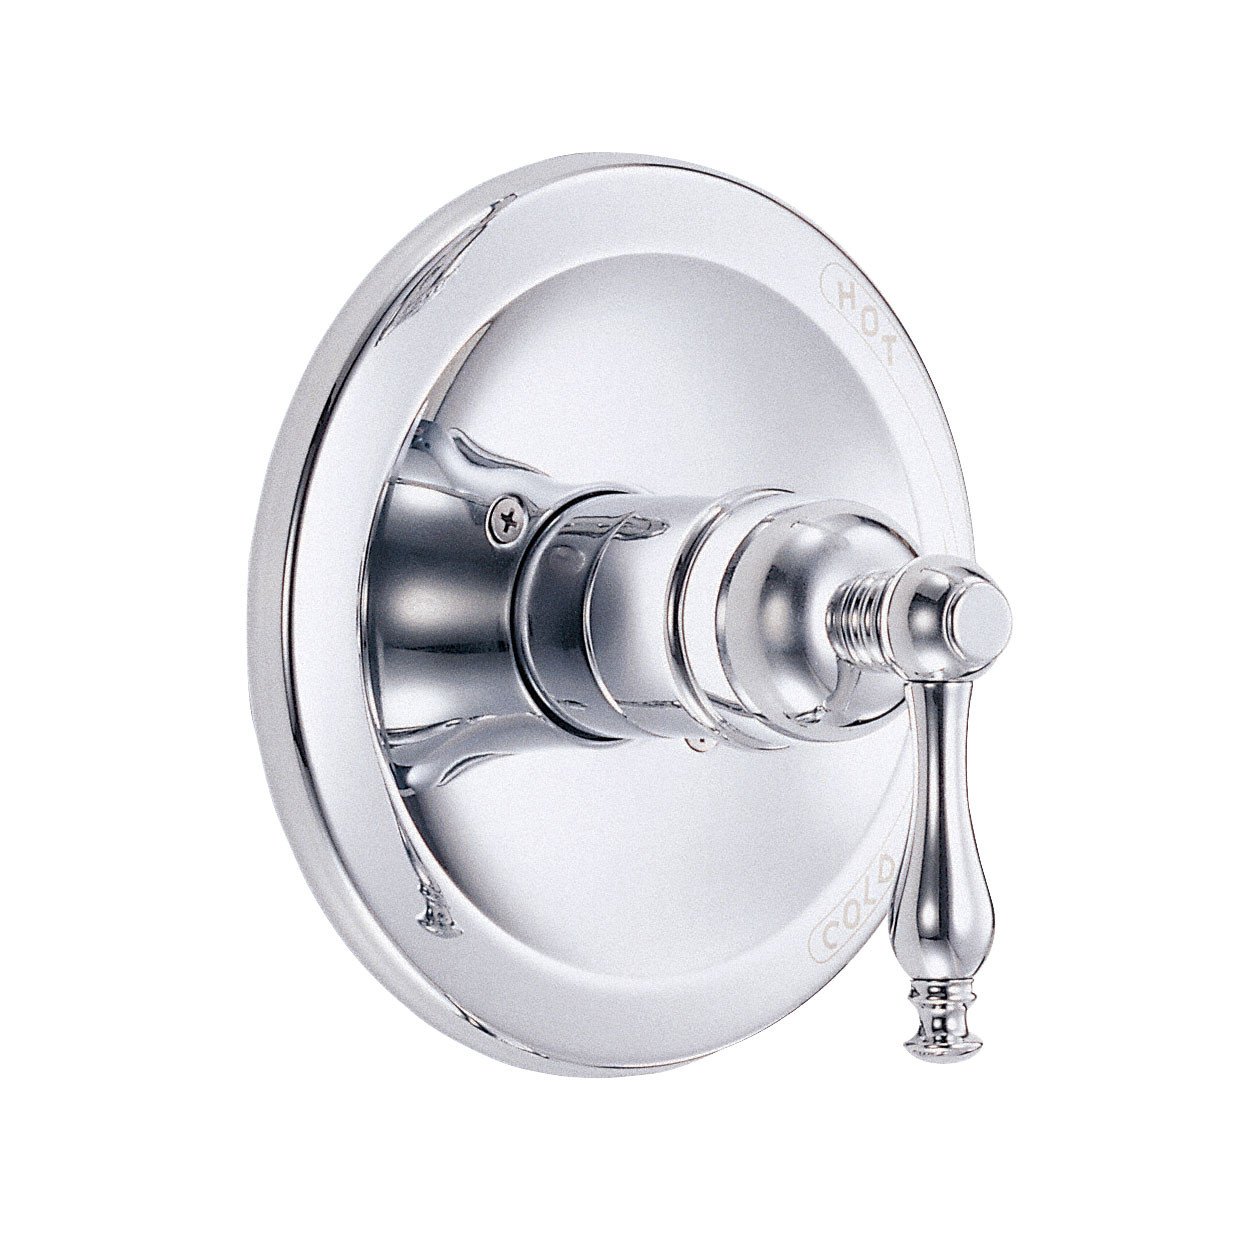 Danze Sheridan Chrome Single Handle Shower Faucet Control INCLUDES Rough-in Valve